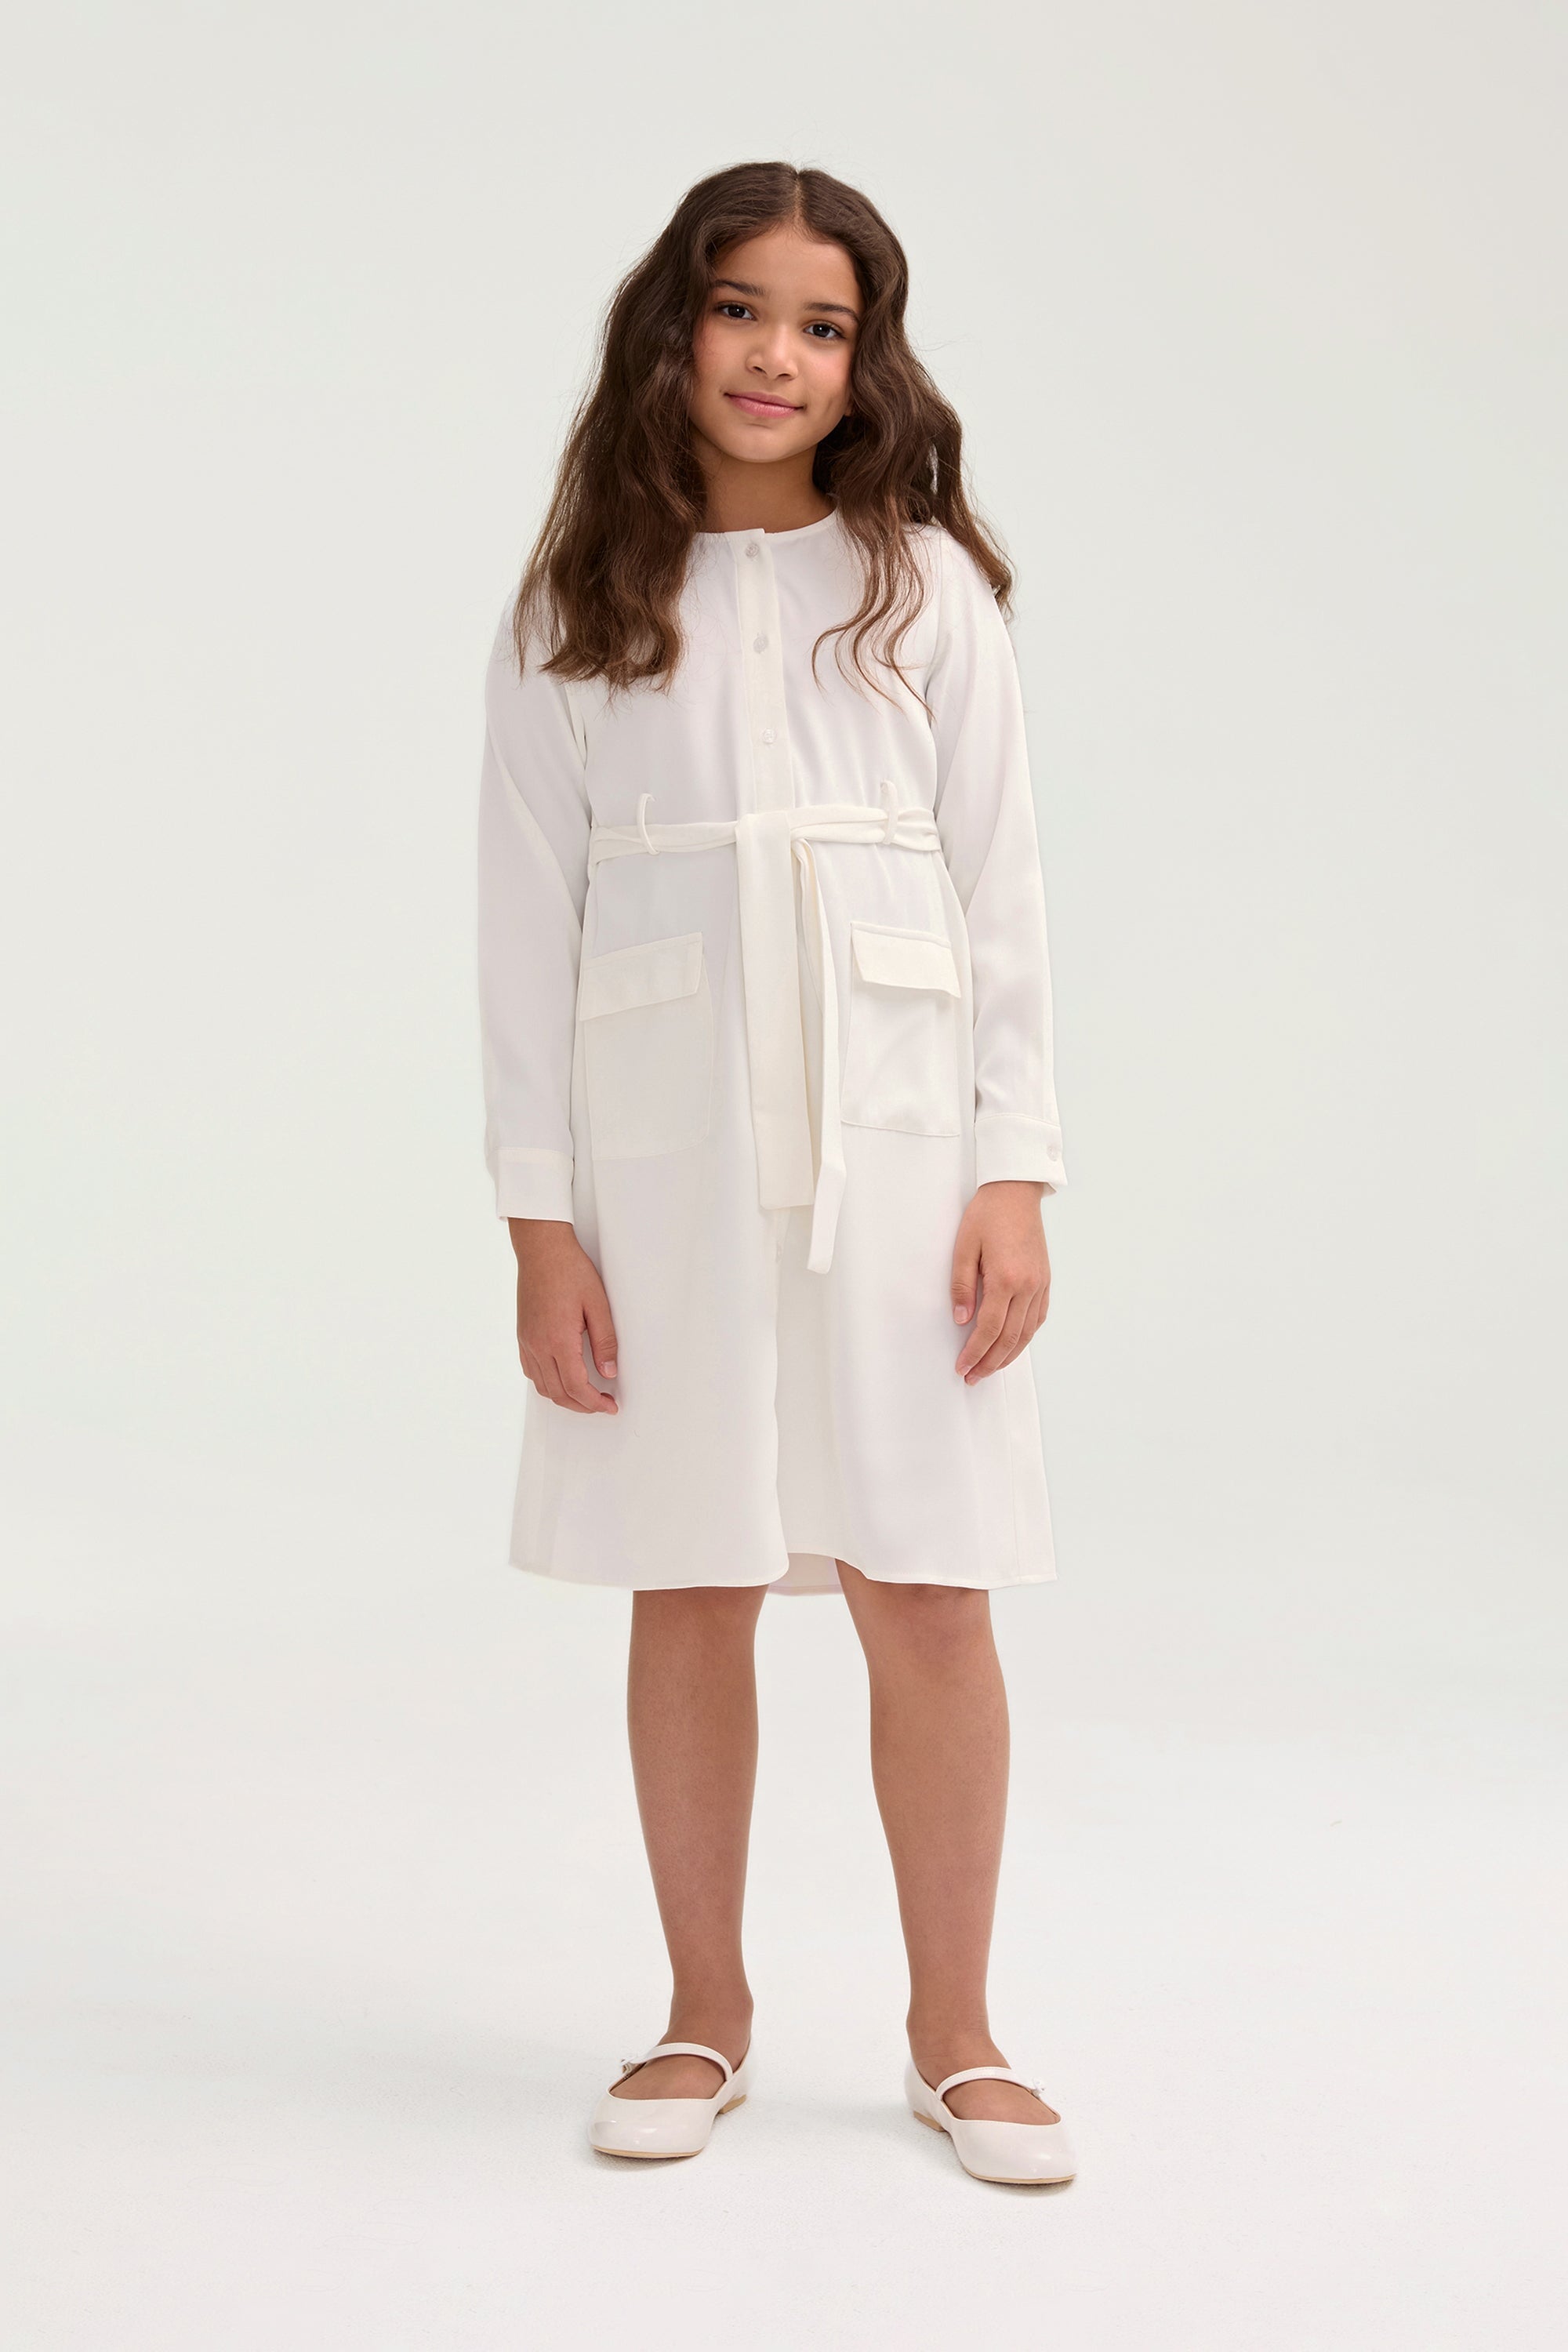 Olivia Button Down Utility Dress - White (Girls) Clothing epschoolboard 